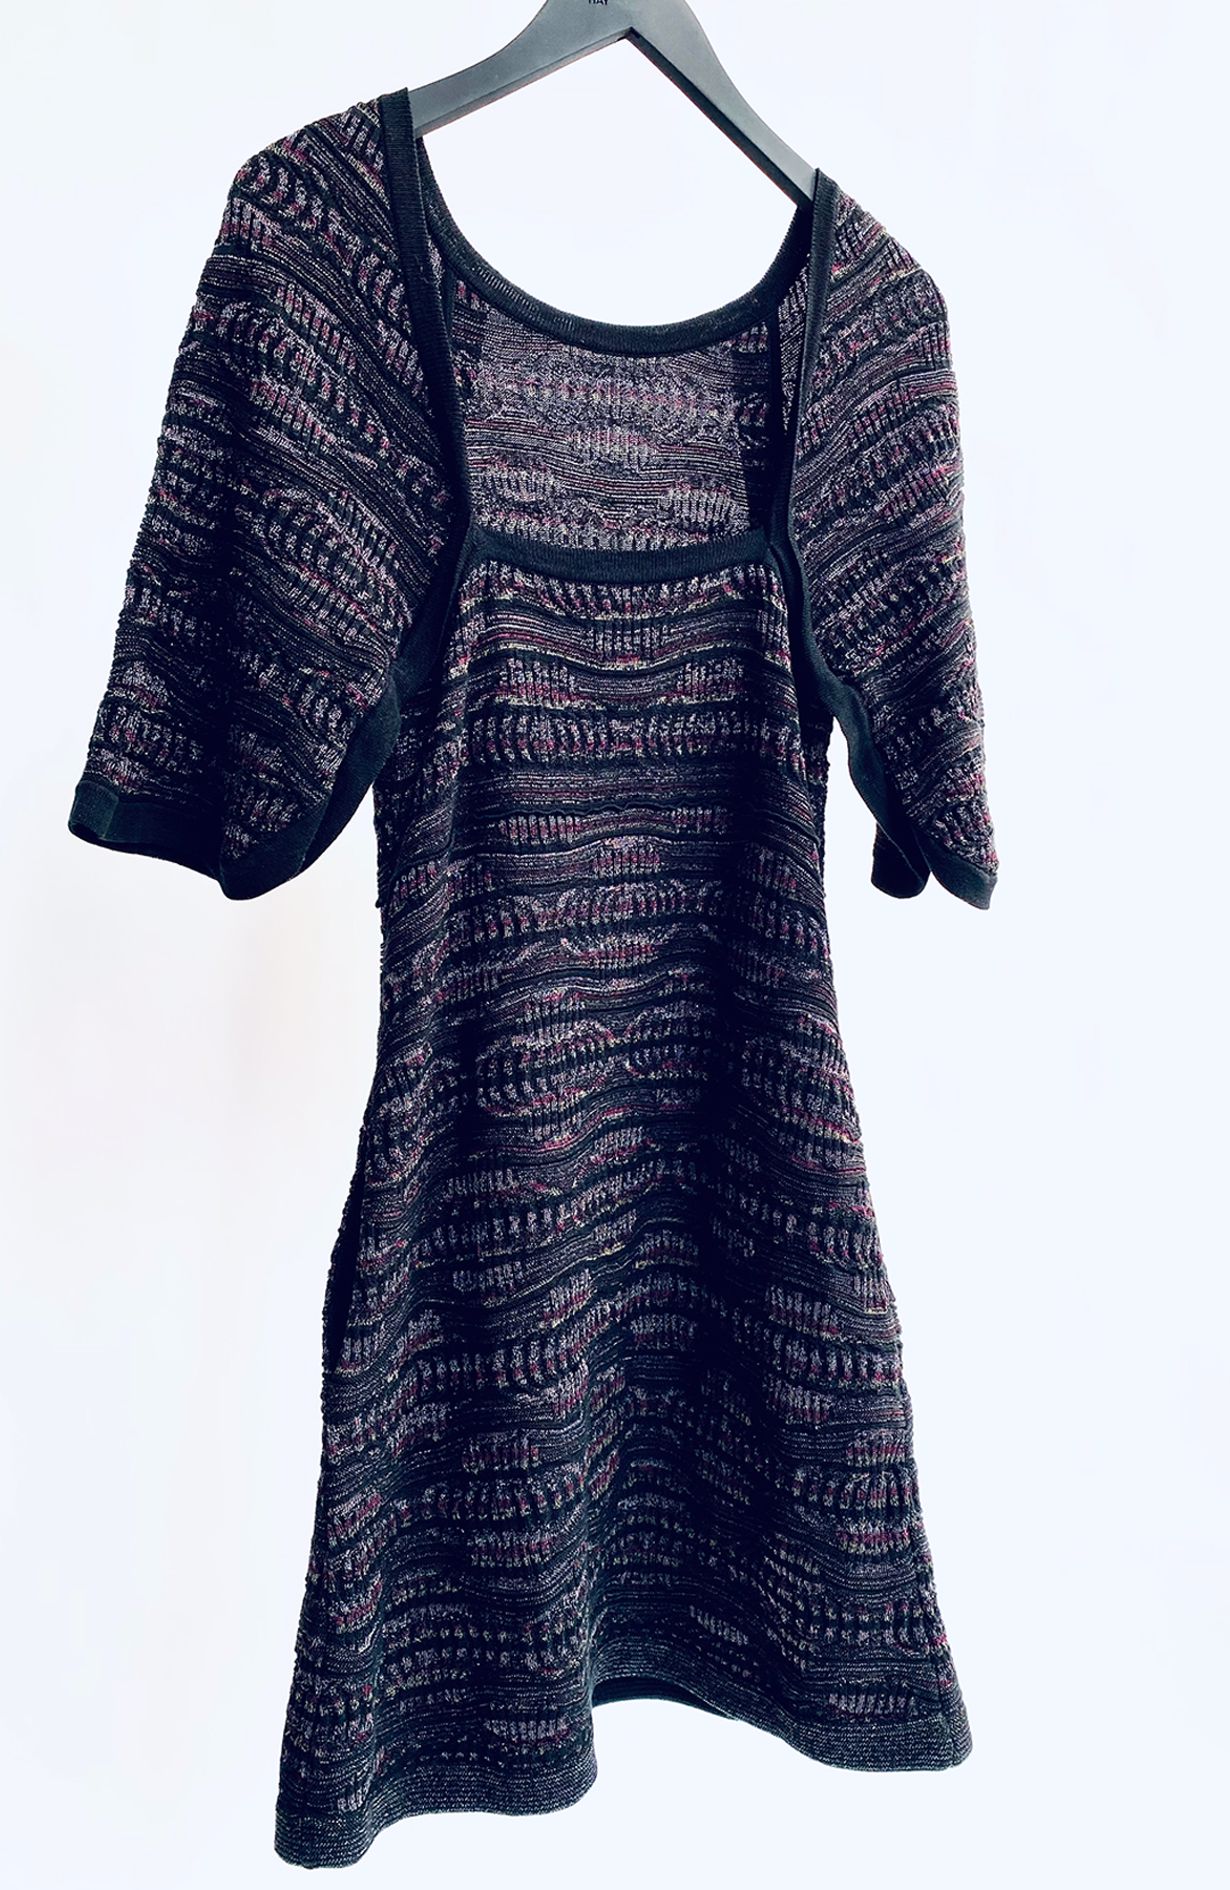 Chanel dress black/purple/silver size F38